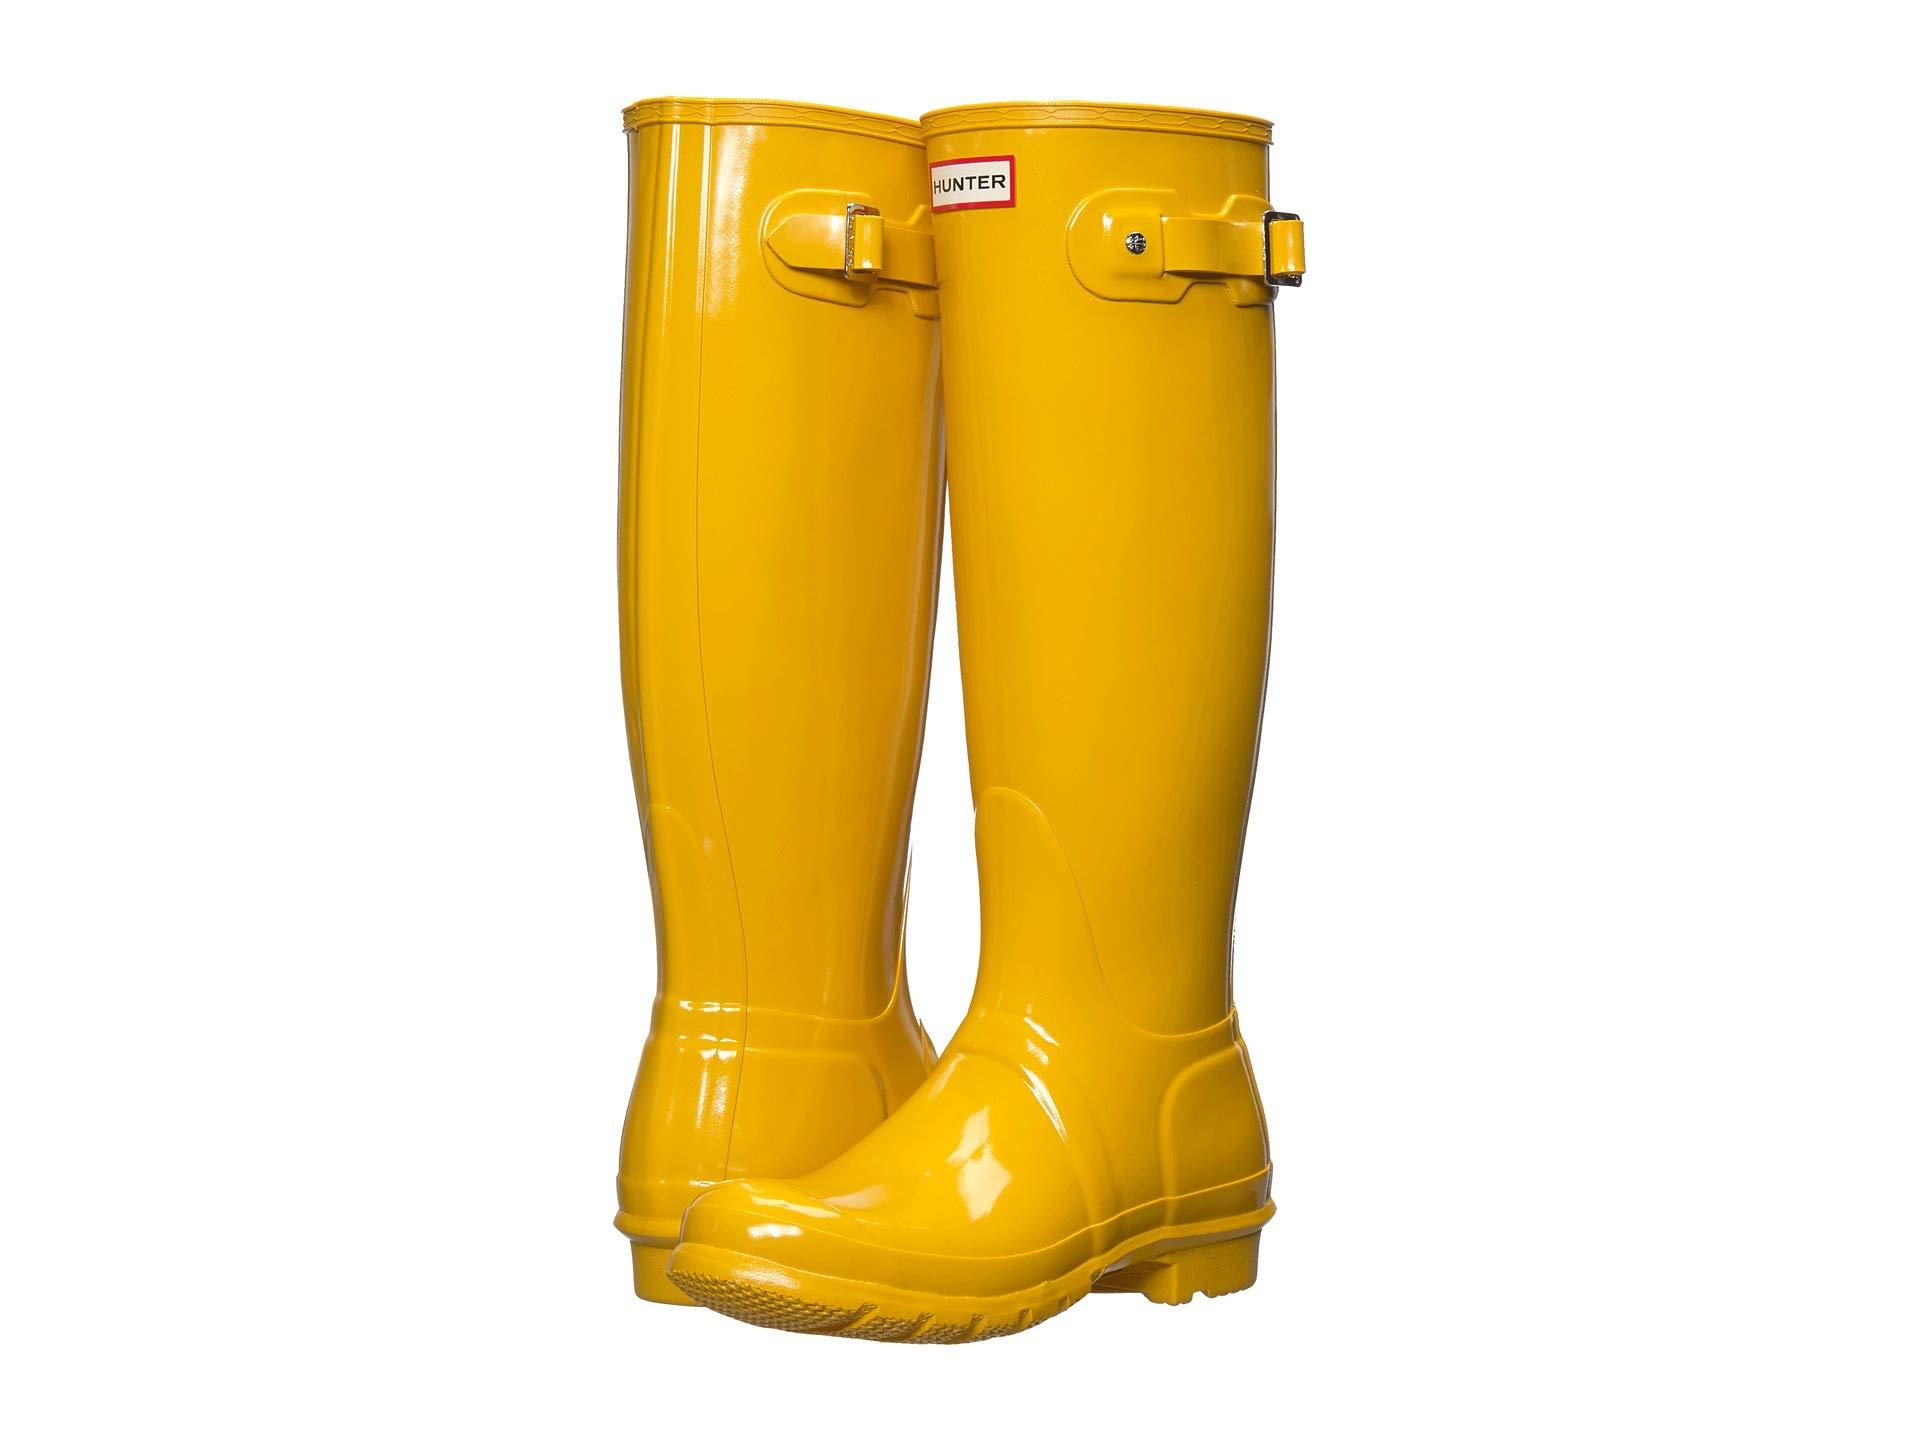 HUNTER Rubber Original Tall Gloss Rain Boots in Yellow - Save 28% - Lyst